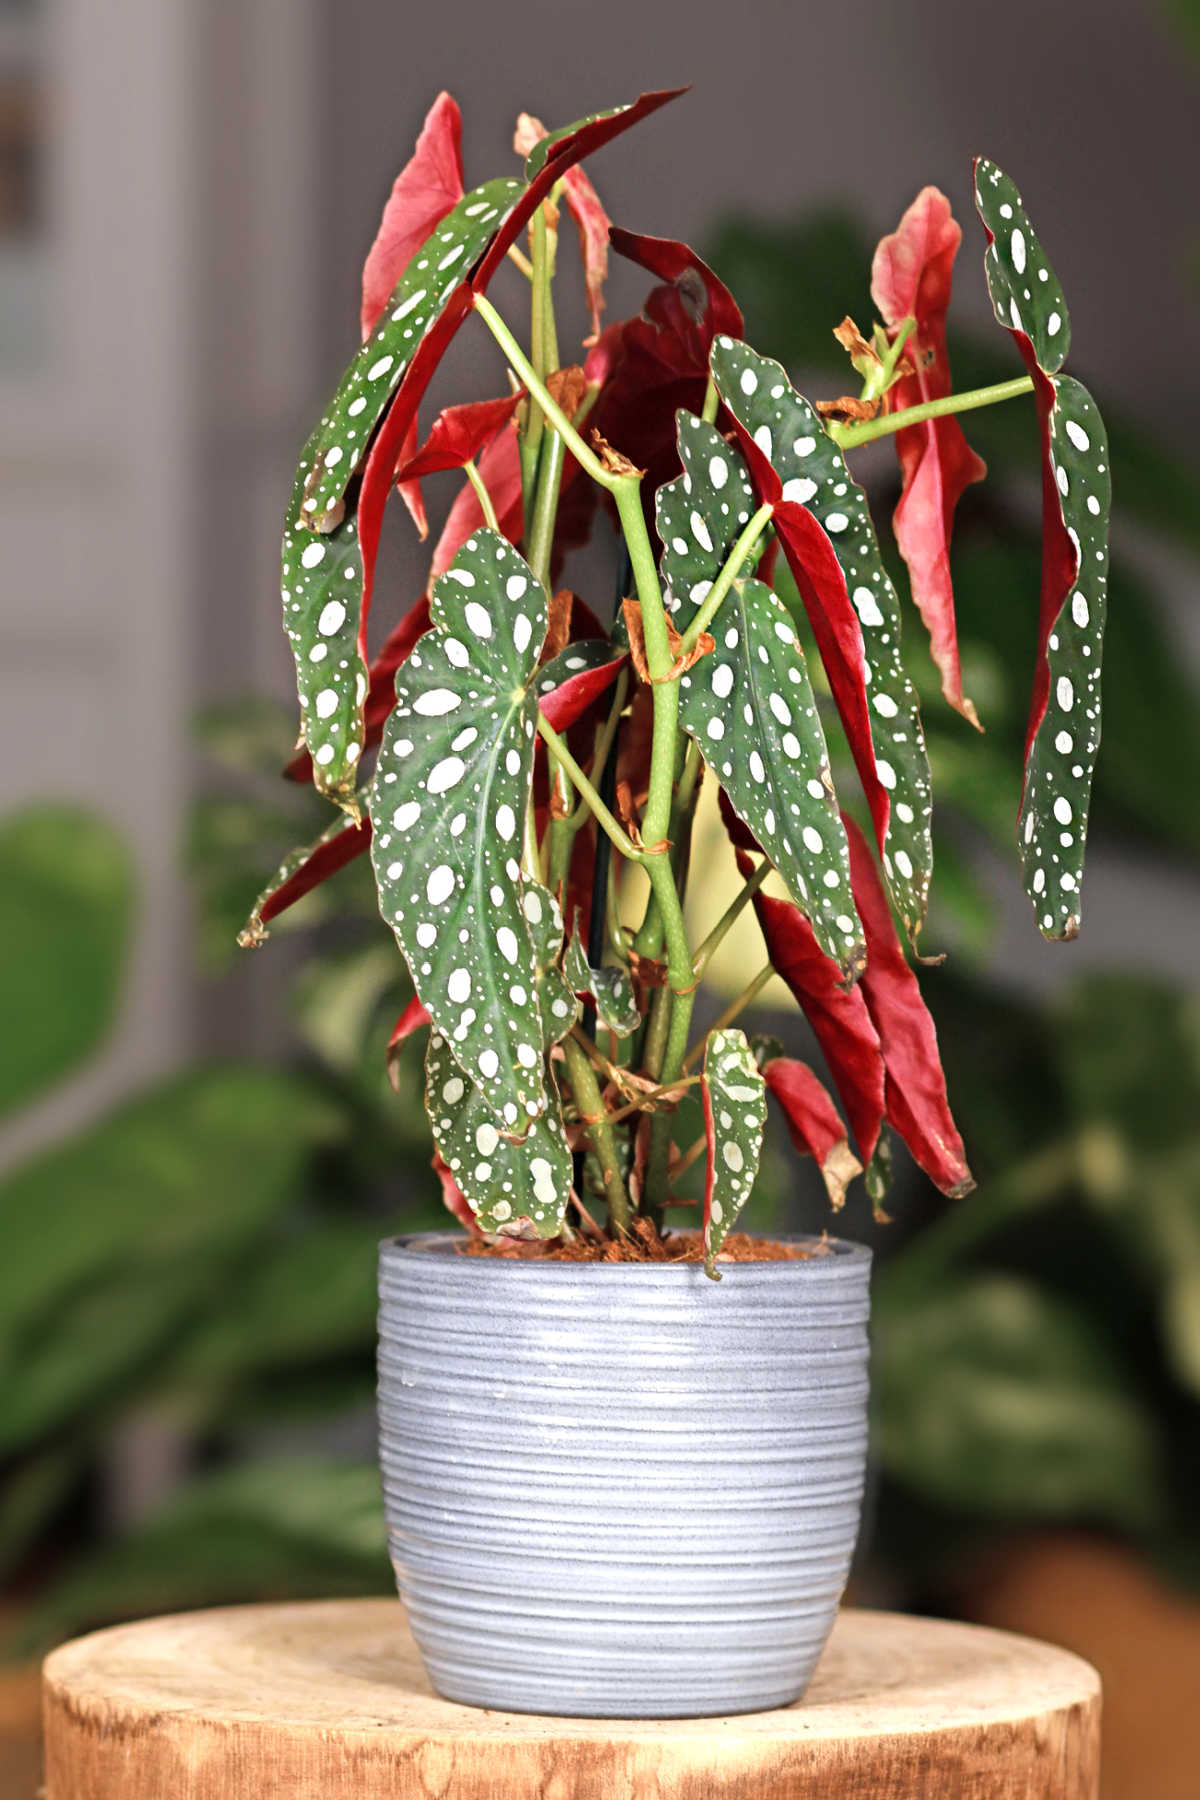 Polka dot begonia plant in a pot.